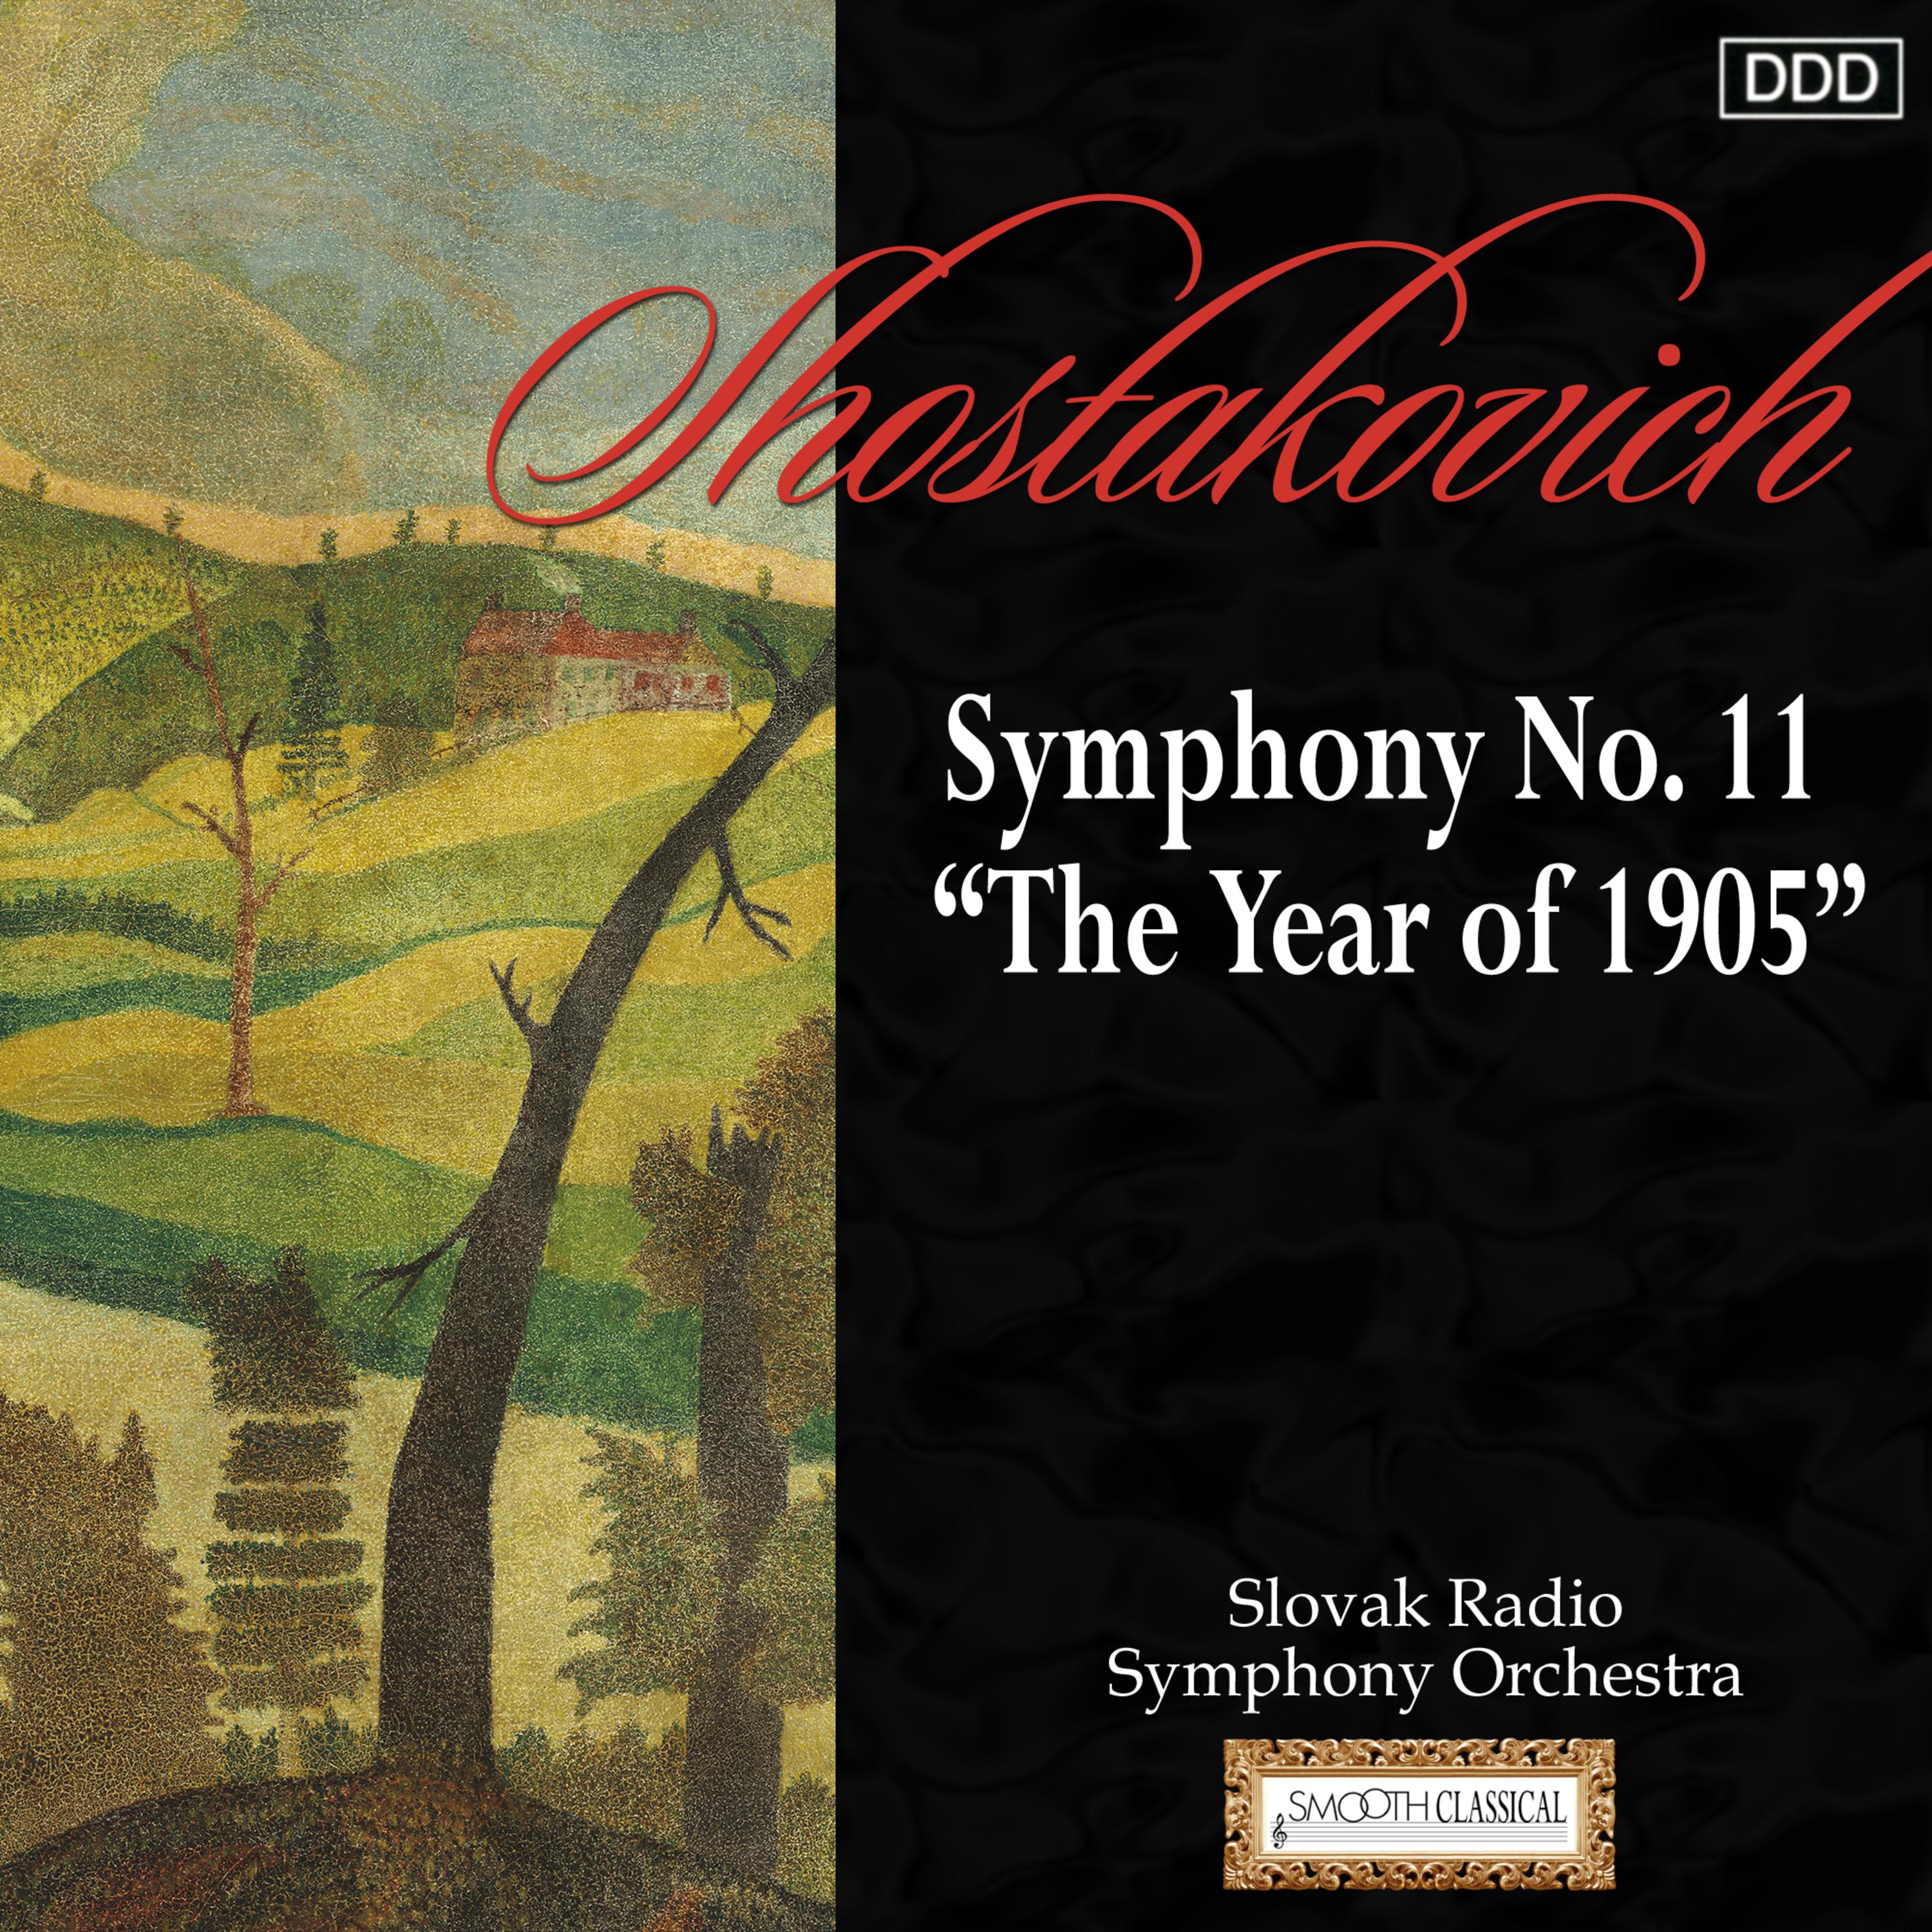 Shostakovich: Symphony No. 11 "The Year of 1905"